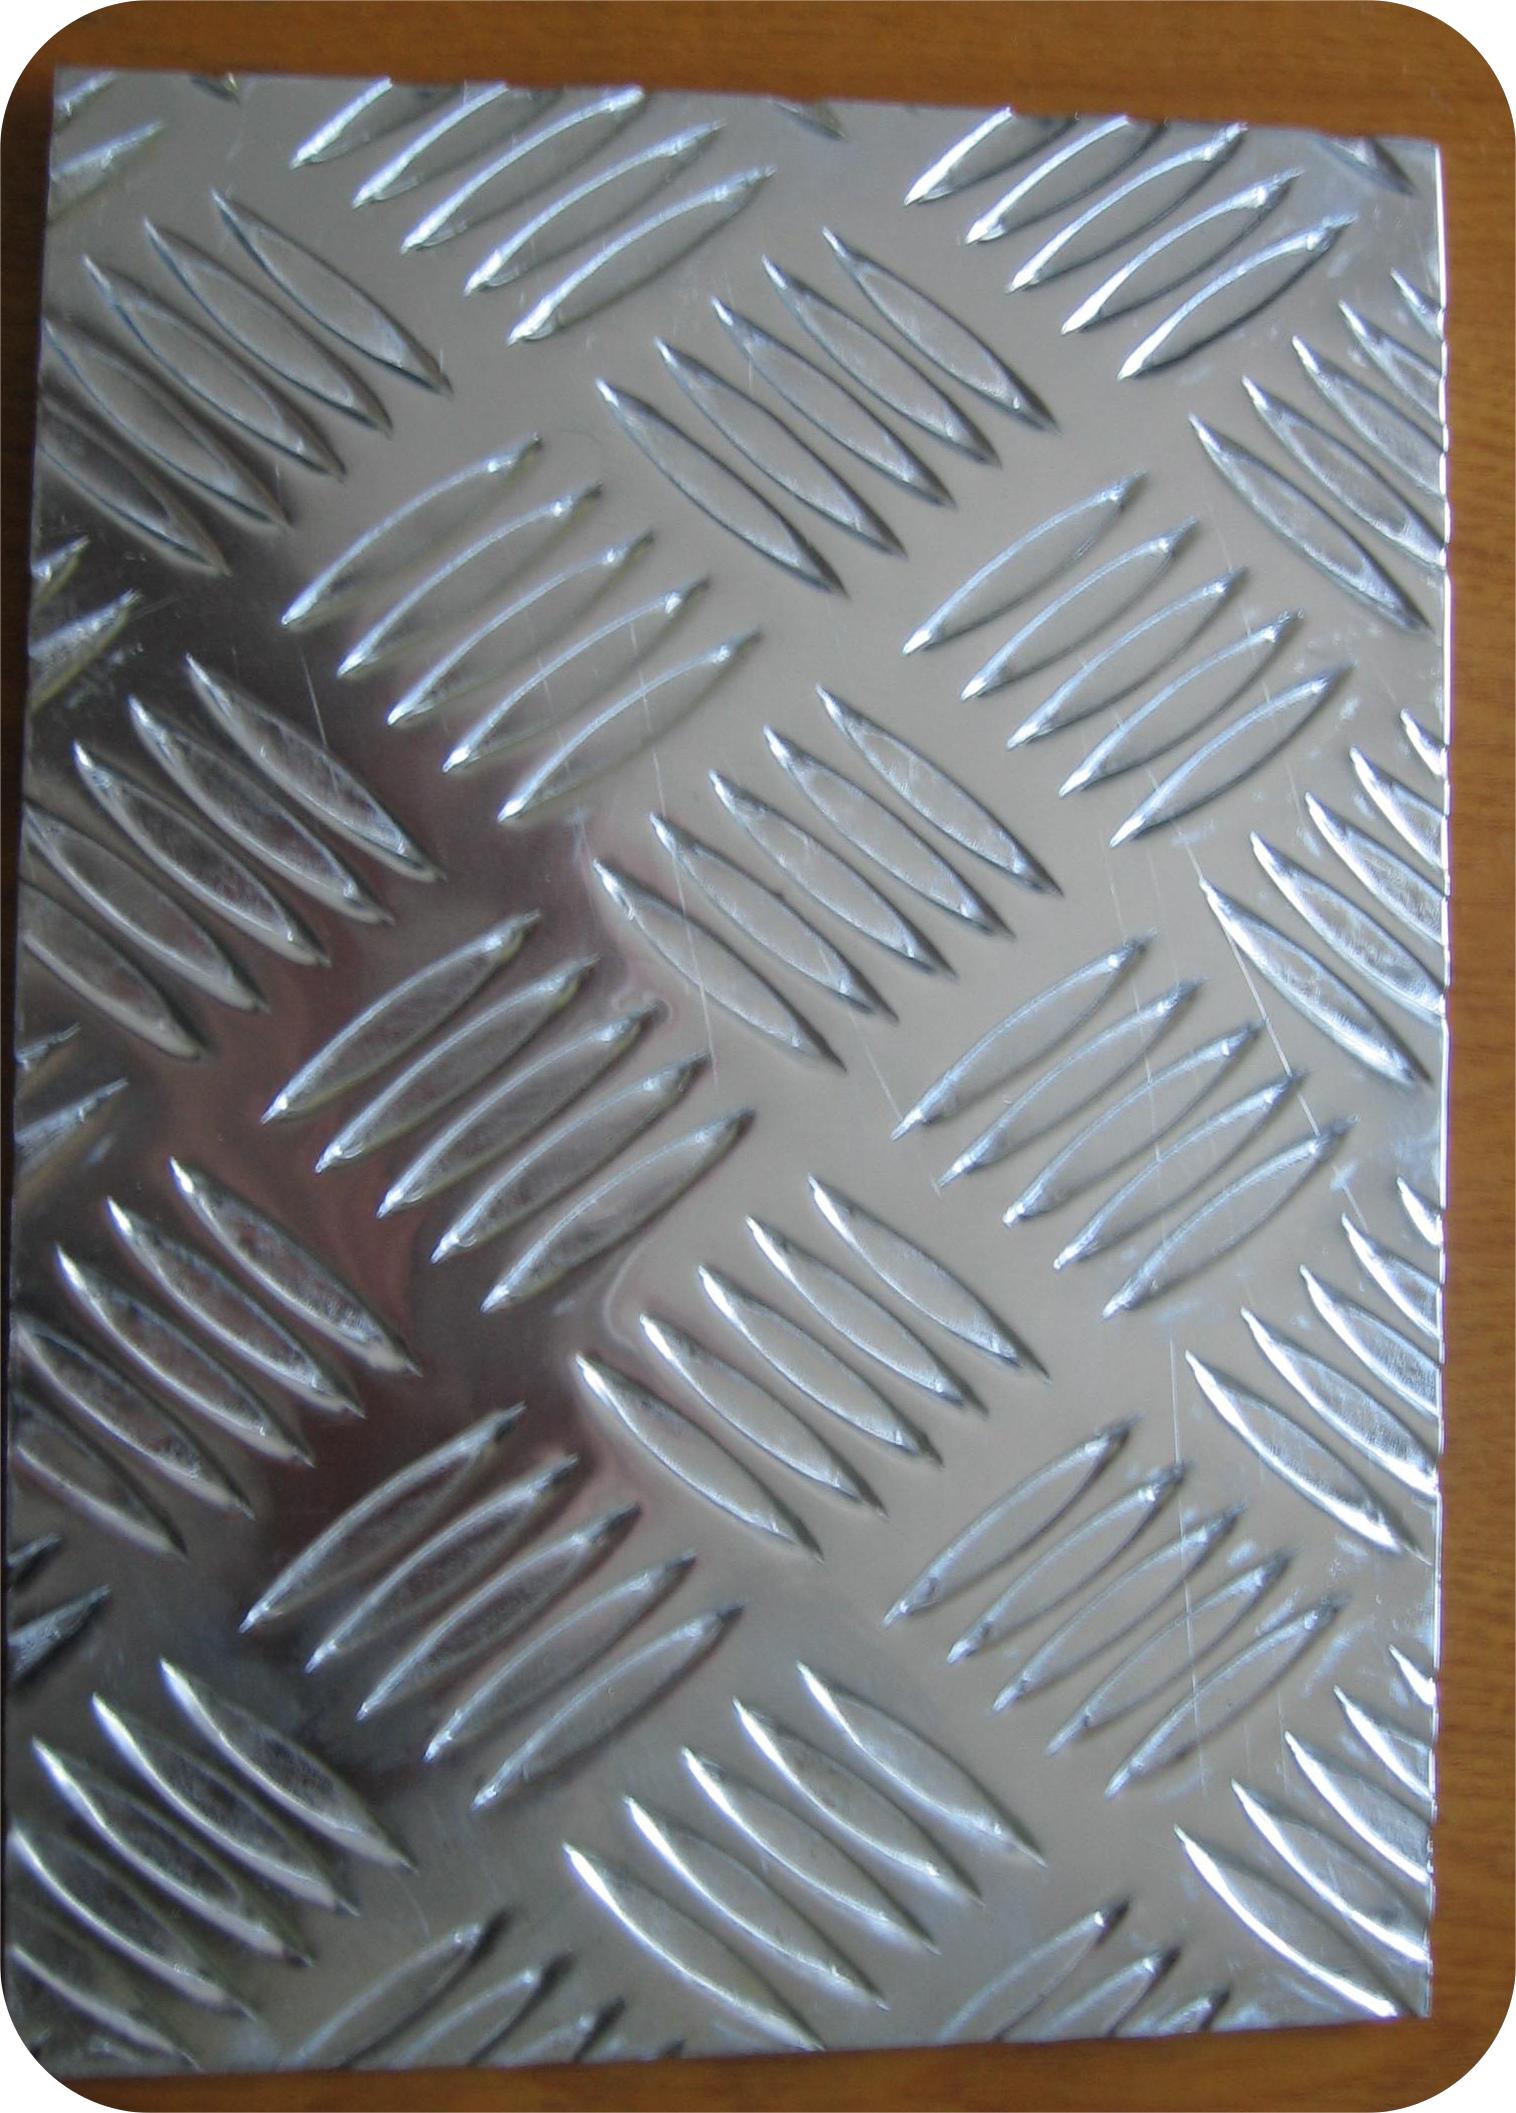 Aluminium 5 bar chequer plate/Treadplate